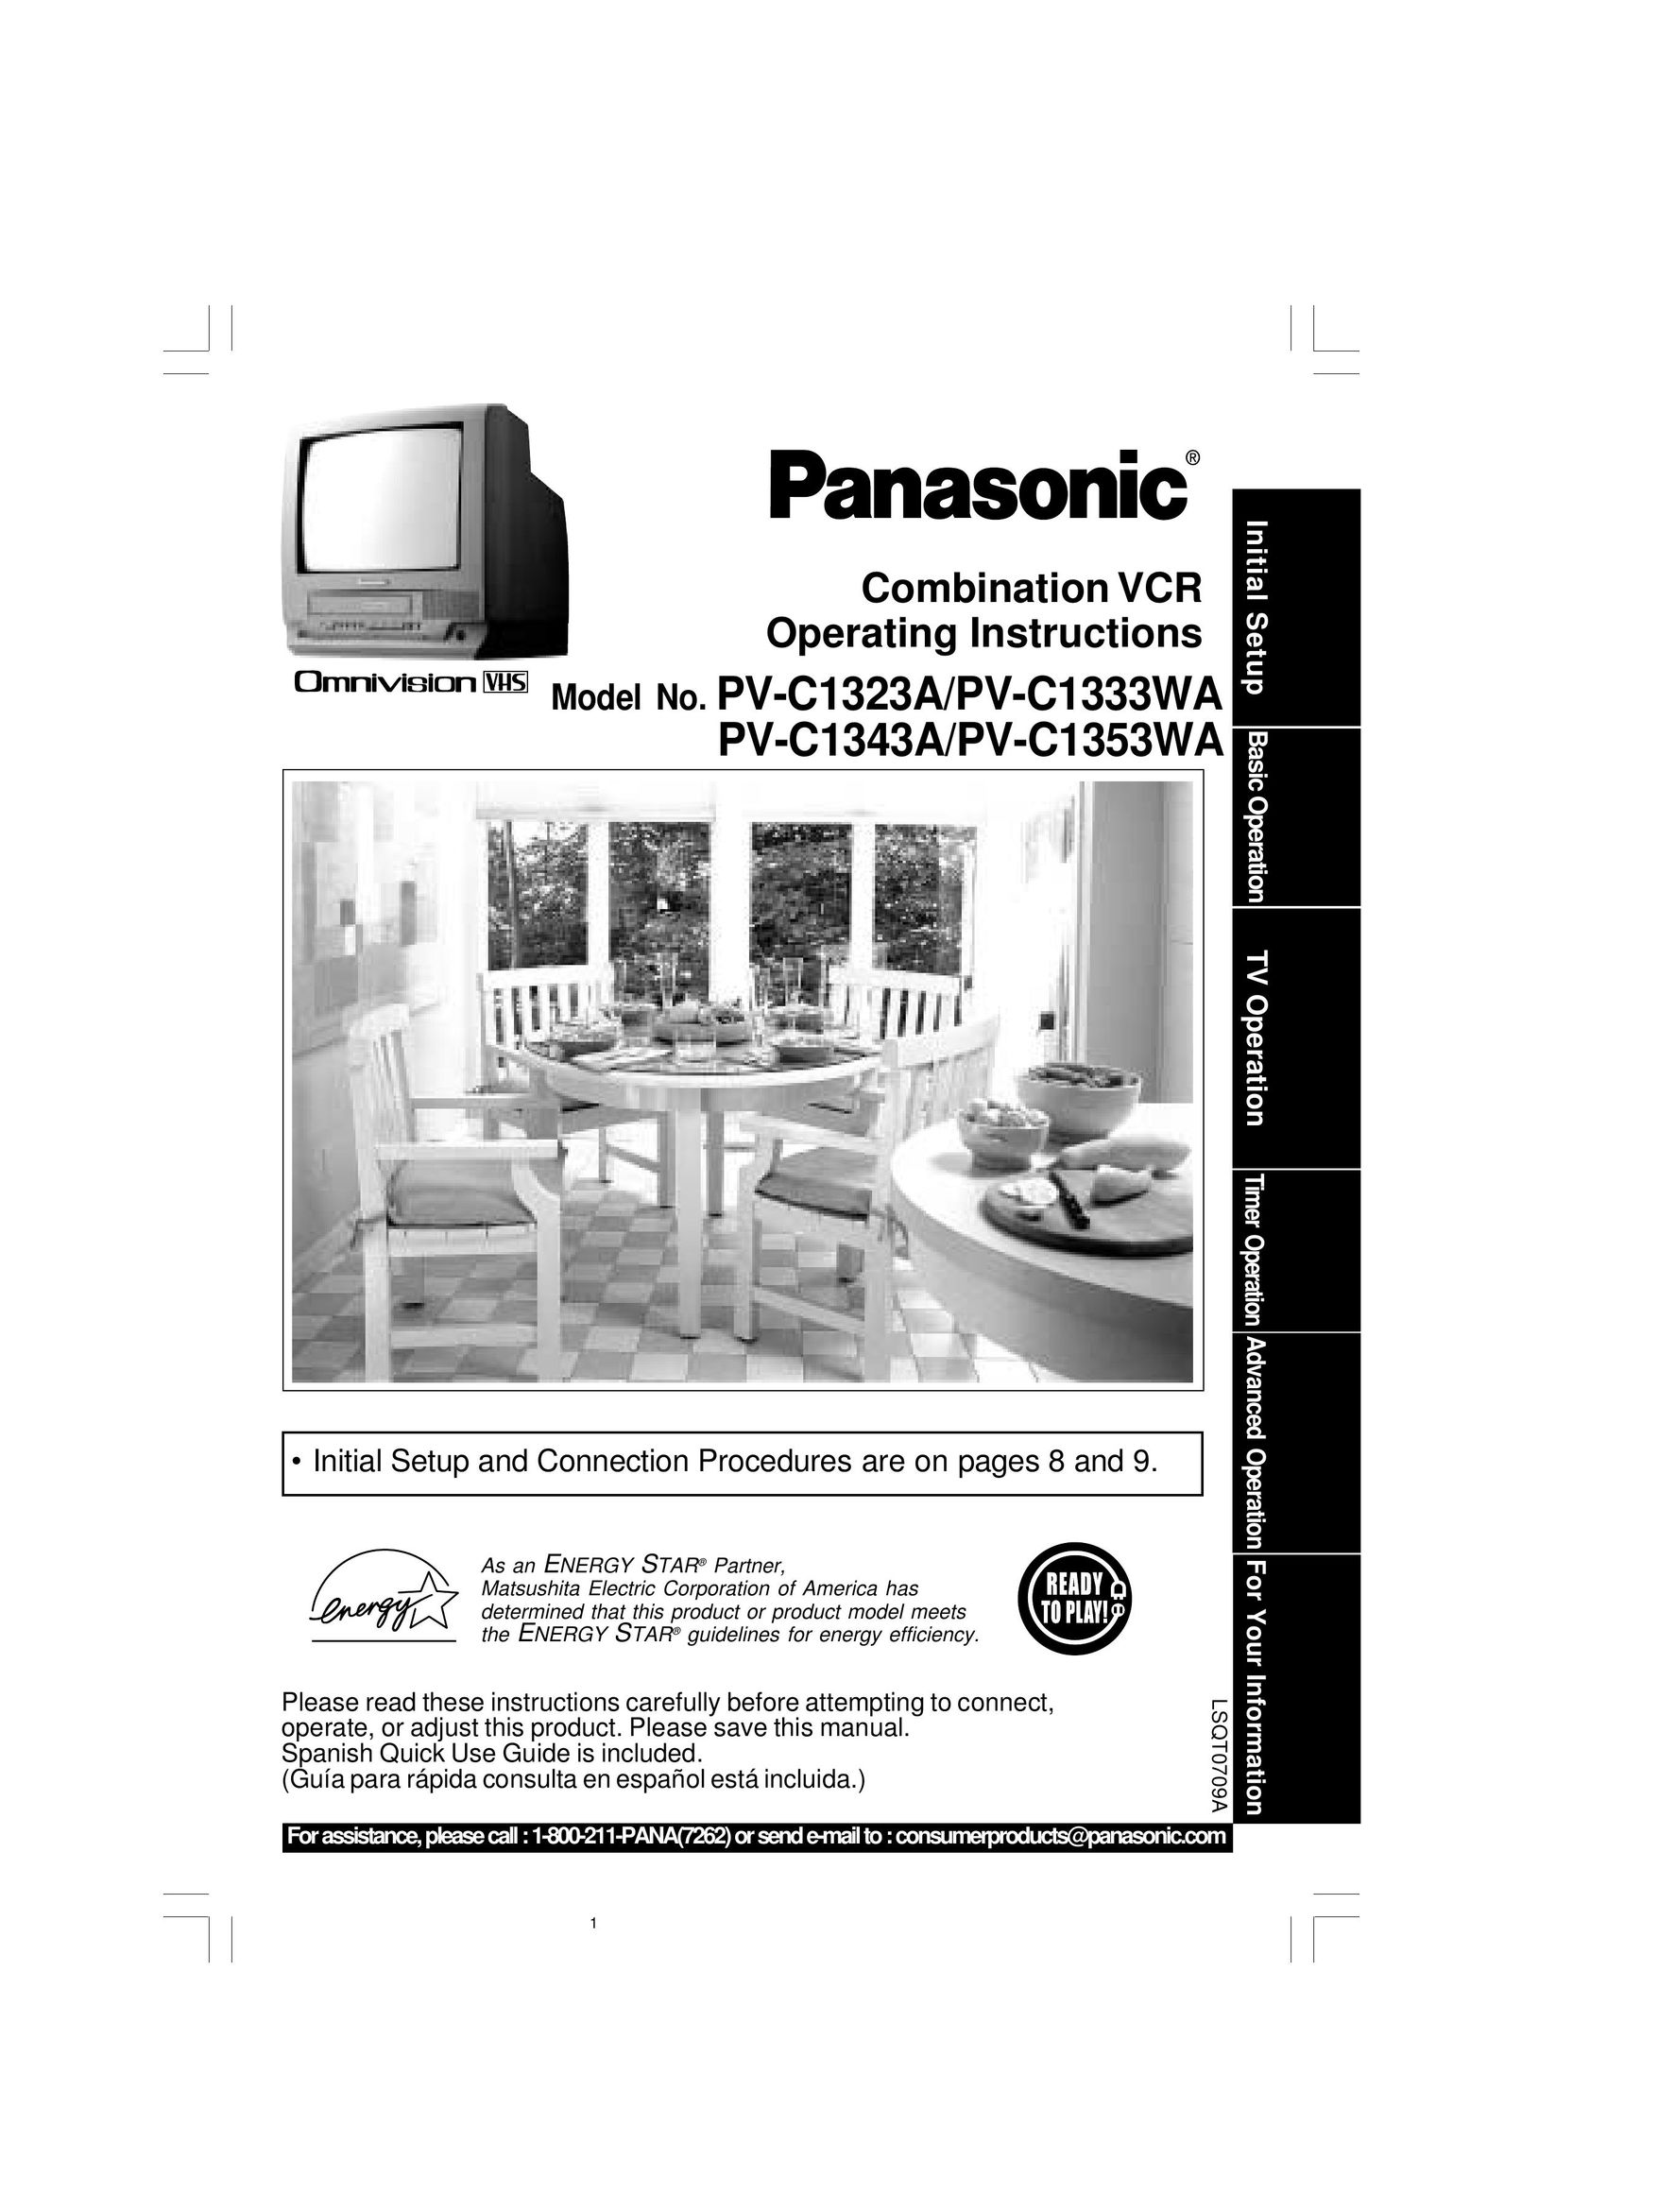 Panasonic PV-C1333WA TV VCR Combo User Manual